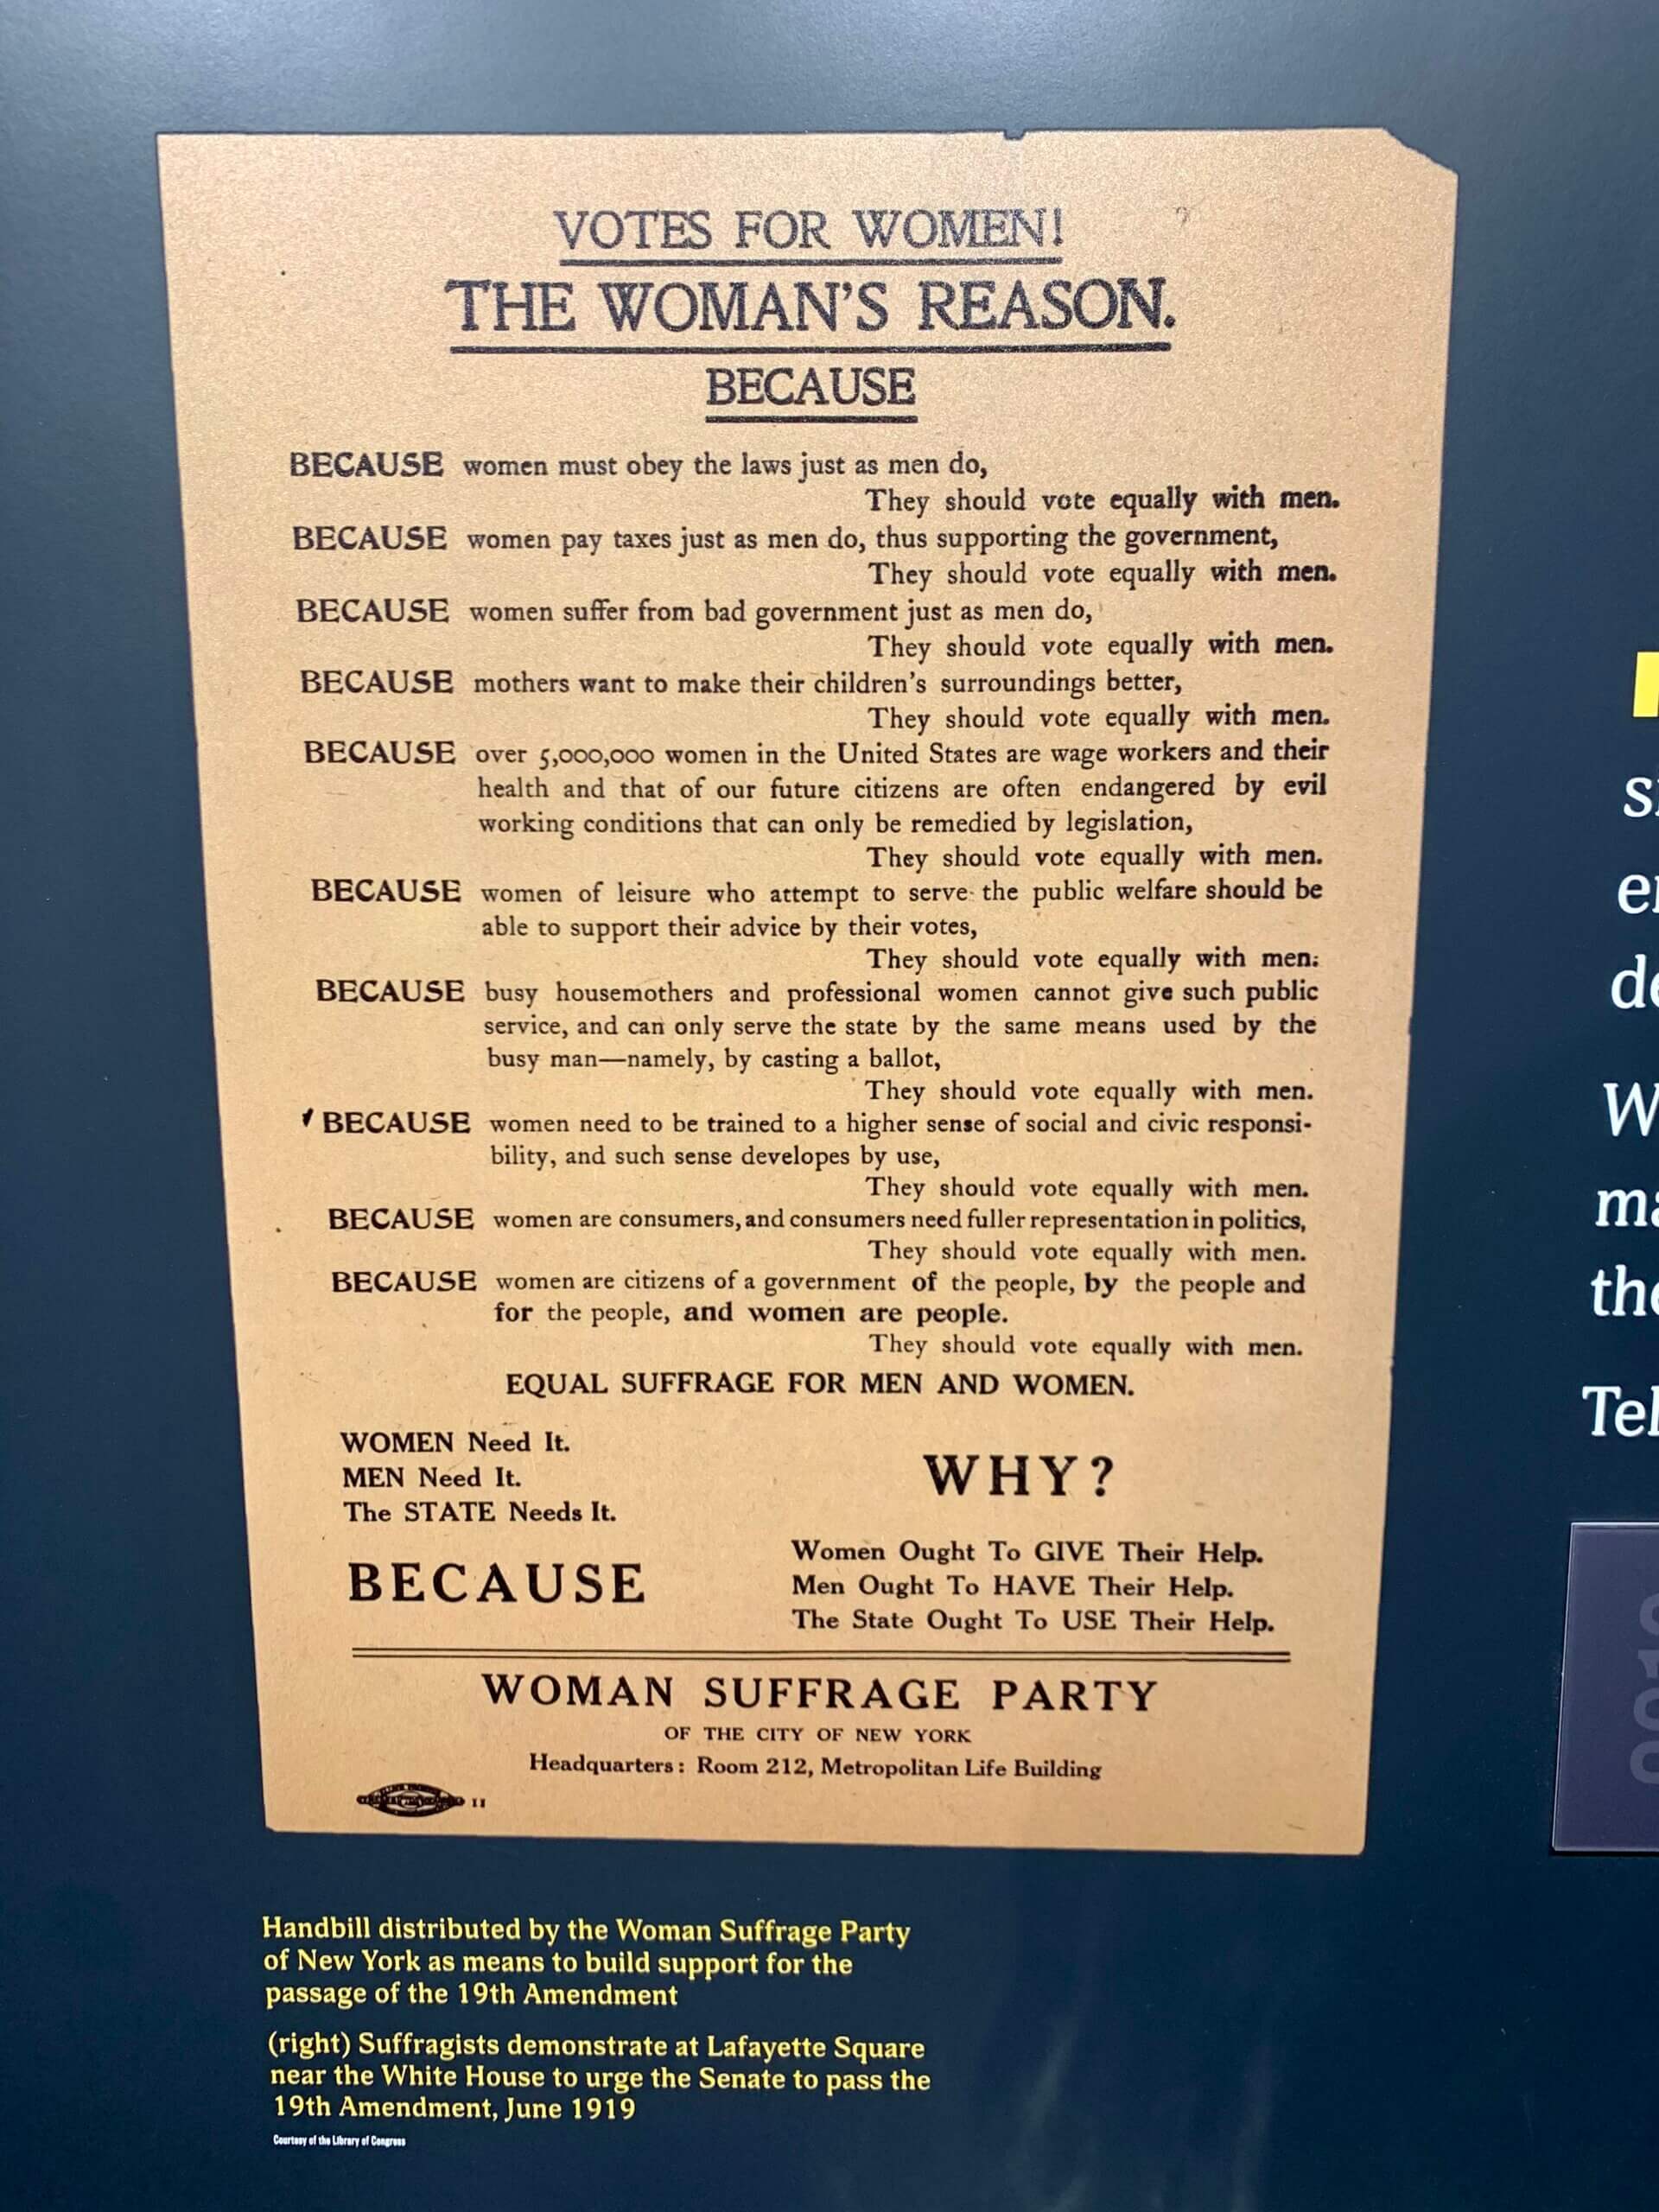 Lucy Burns Museum - suffrage handbill